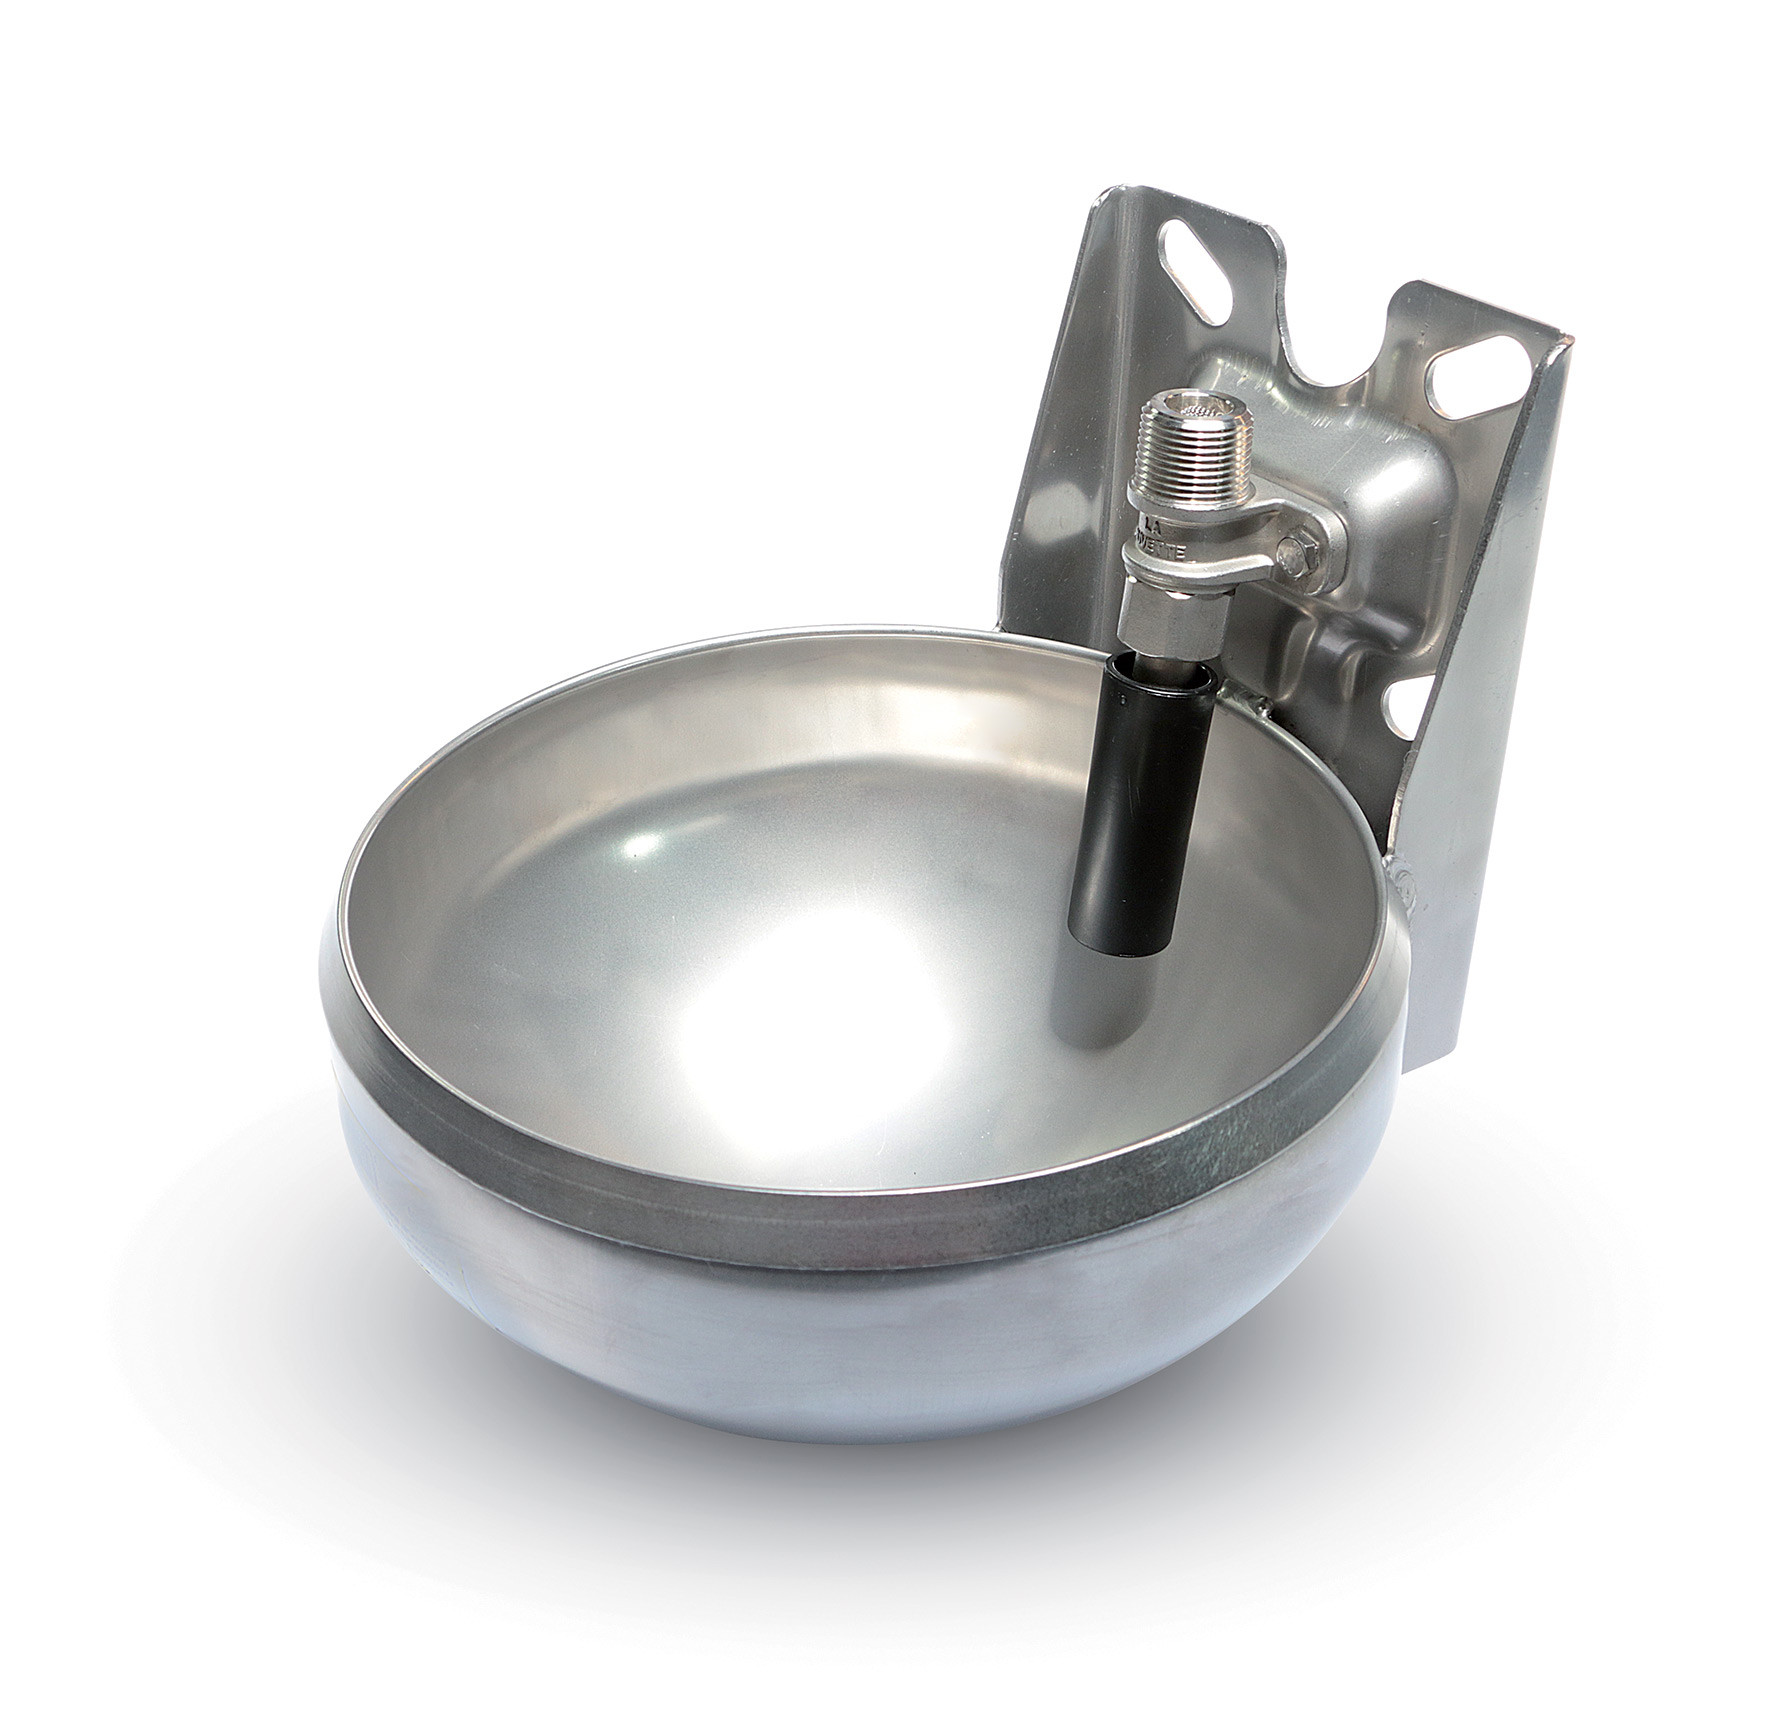 F110 INOX Stainless steel drinking bowl